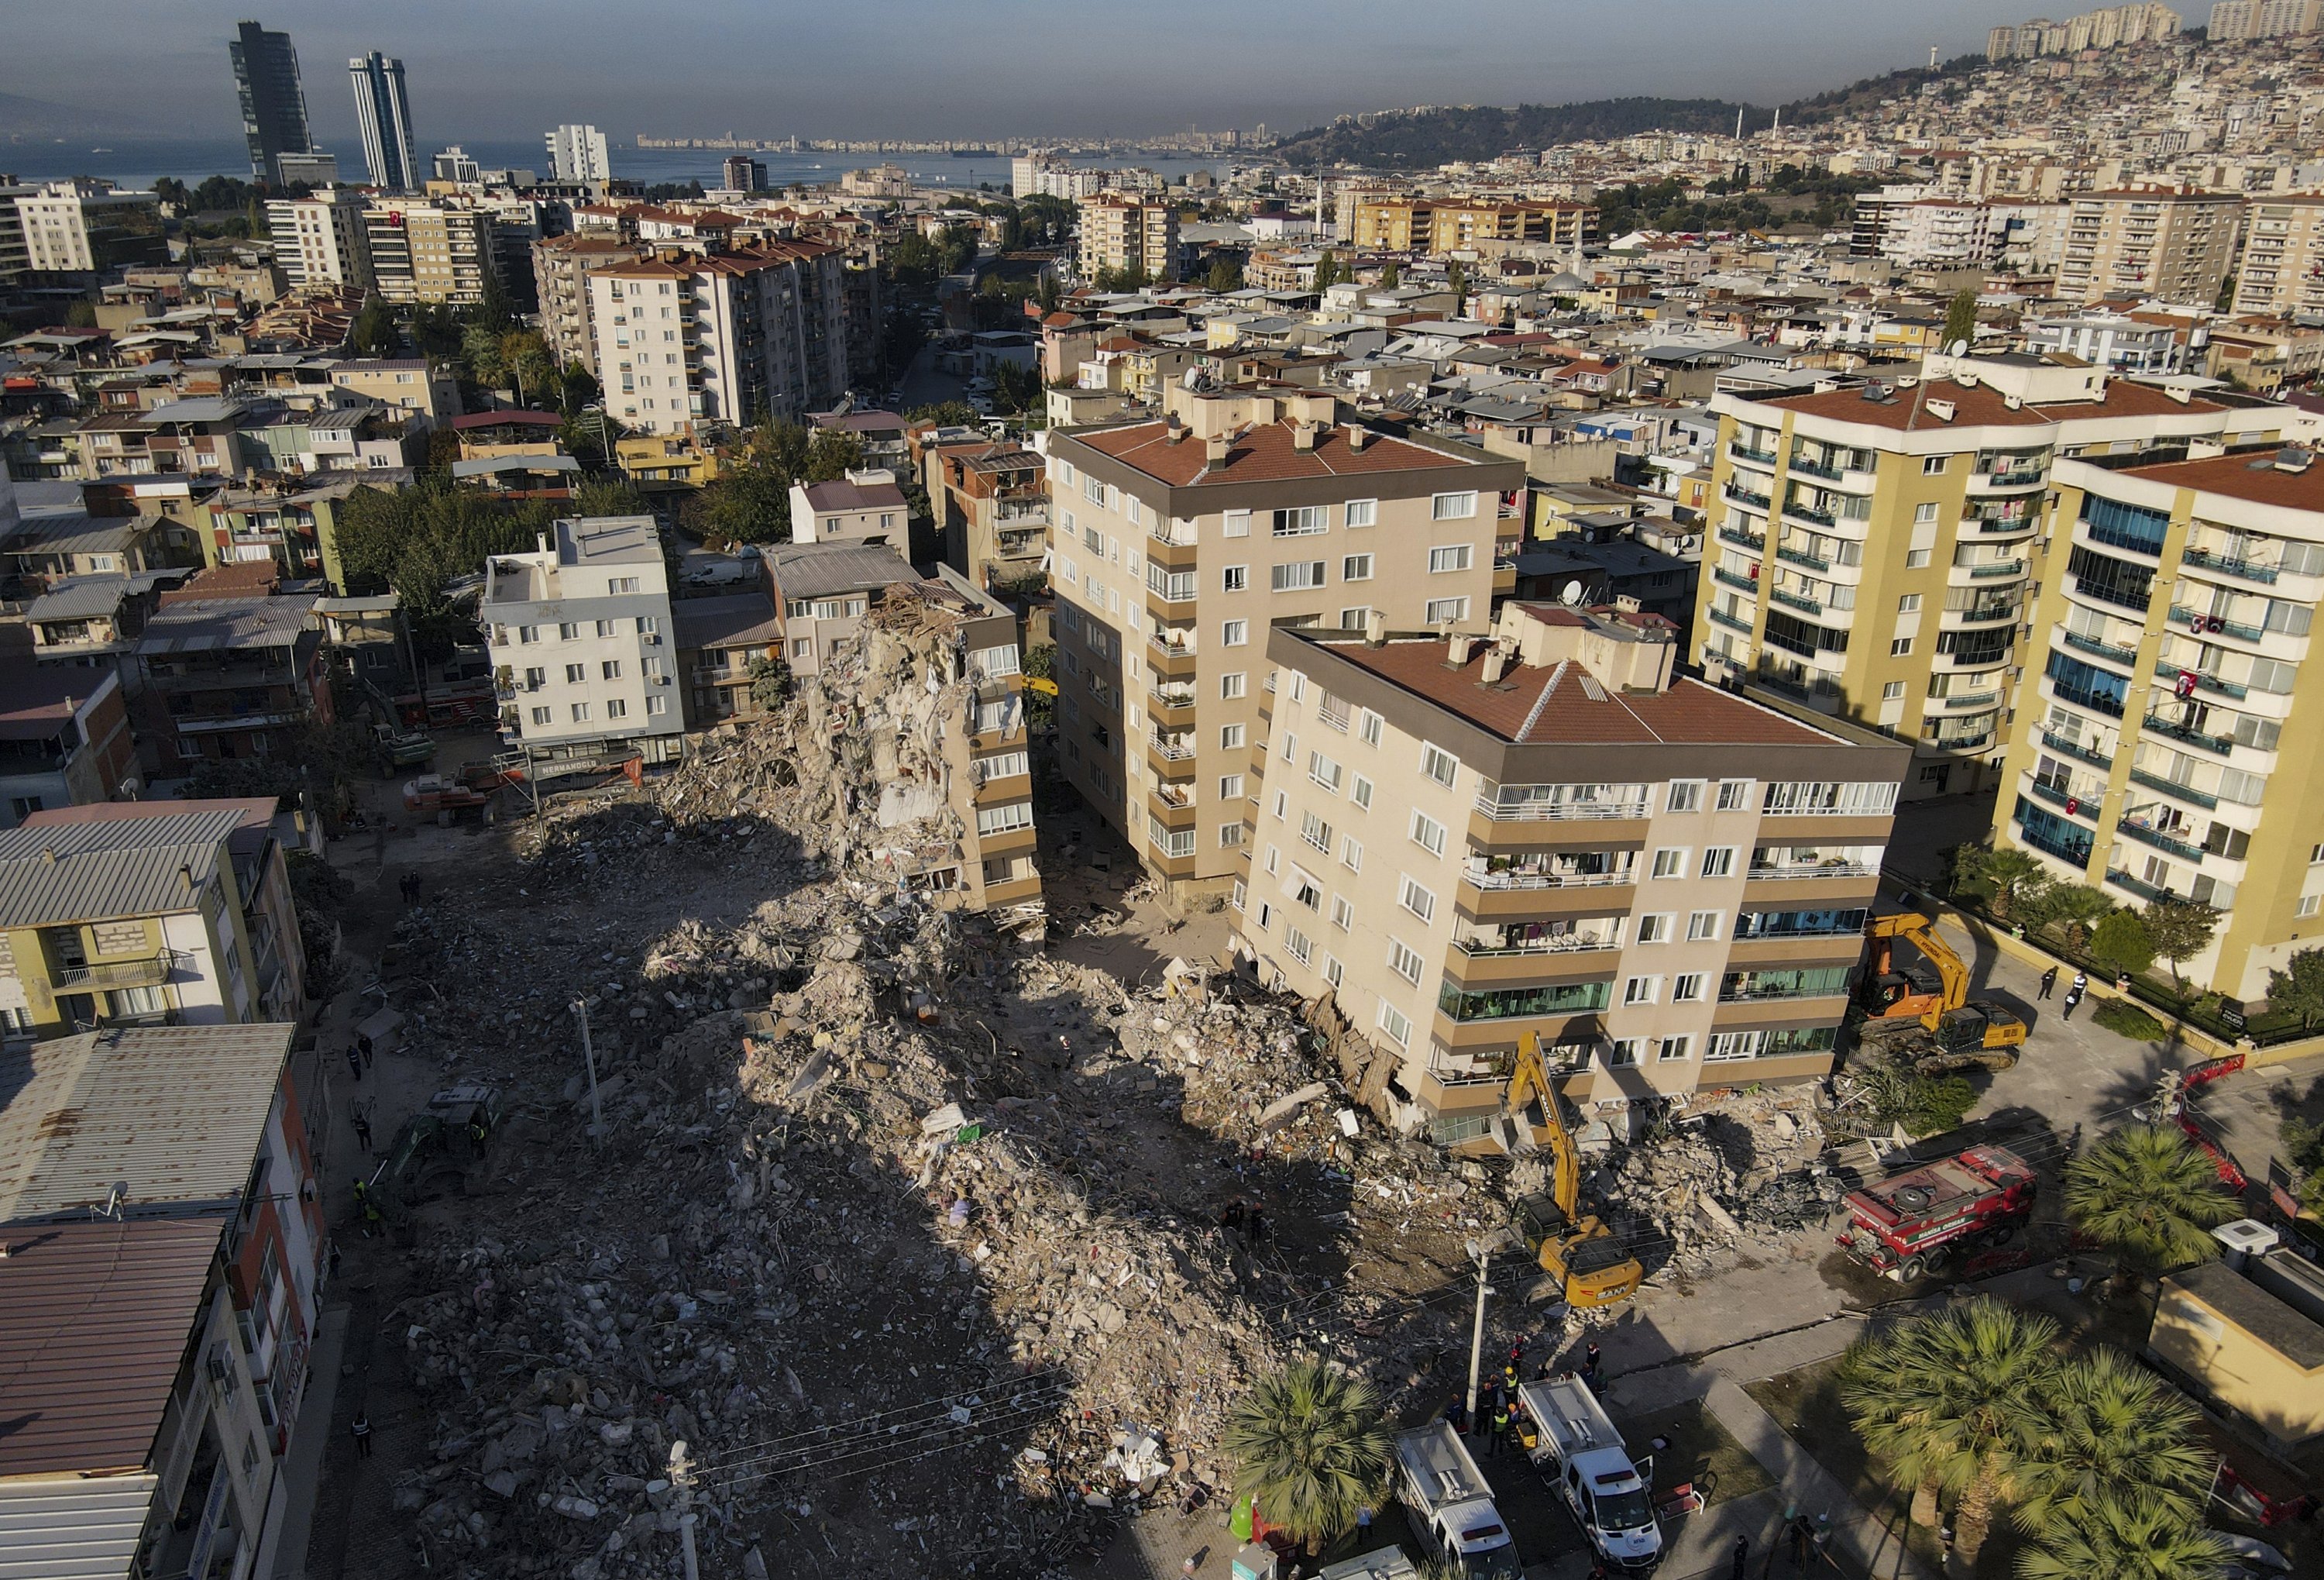 Unsafe buildings worsened impact of Izmir earthquake in western Turkey